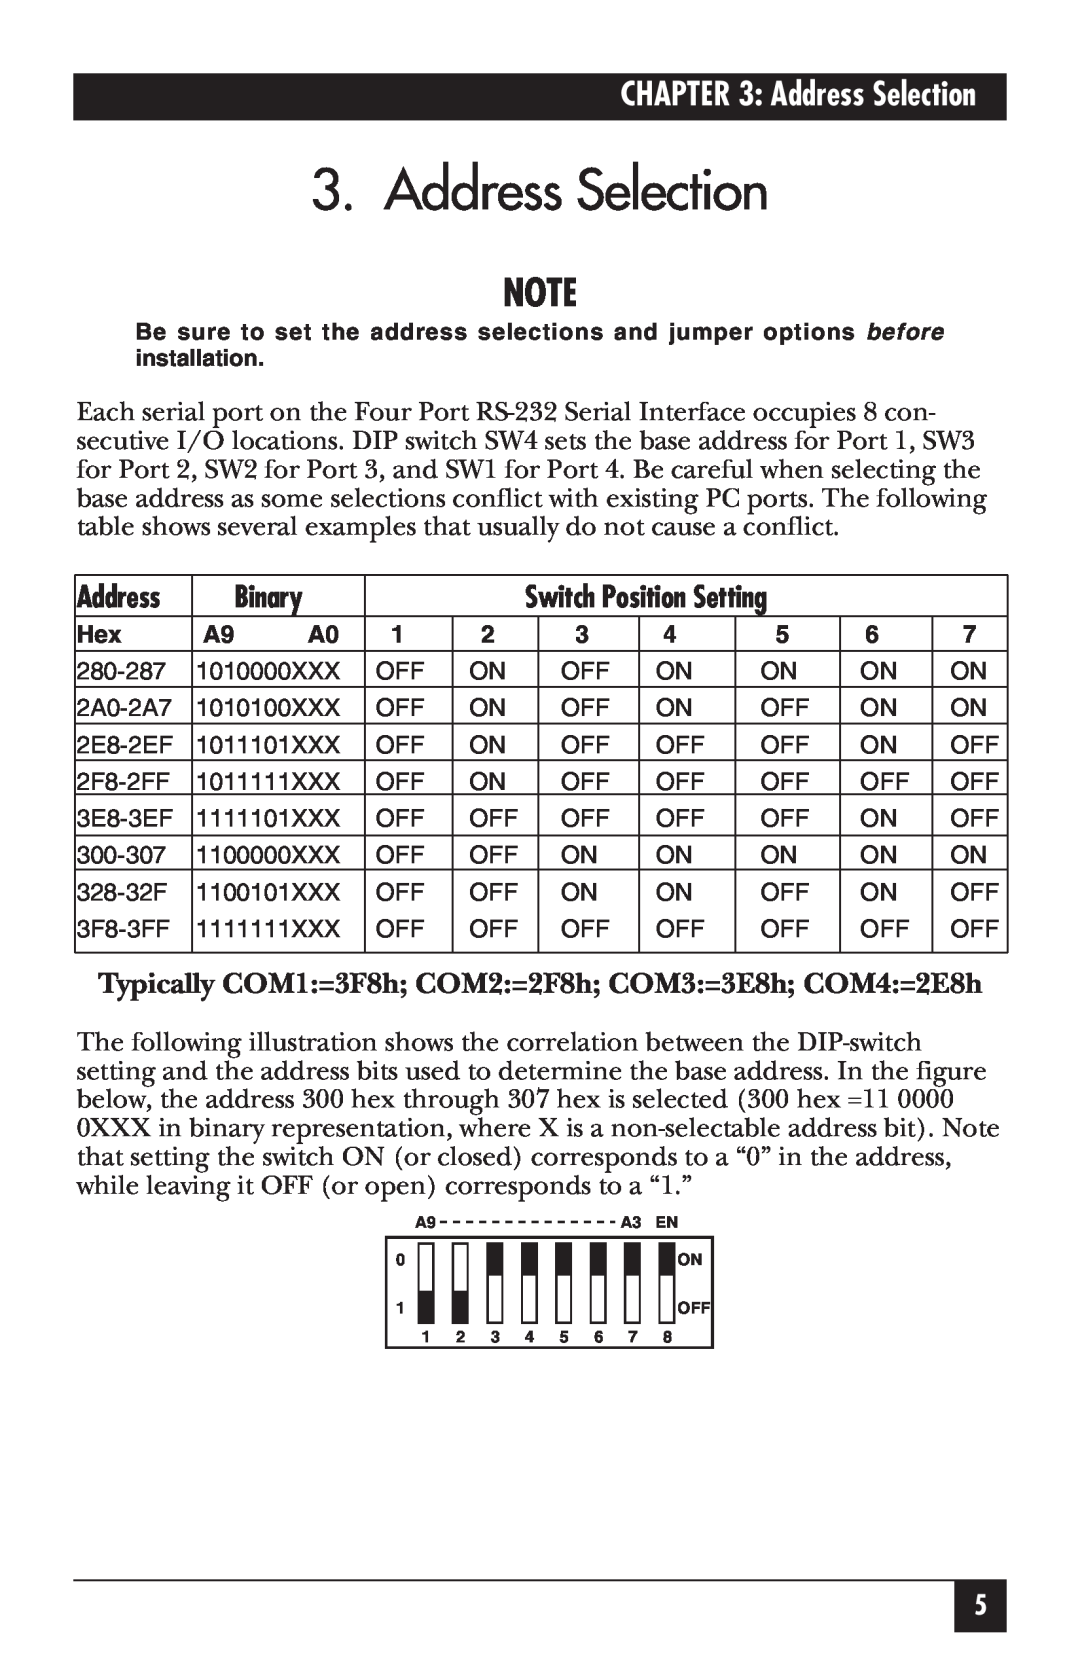 Black Box RS-232 Address Selection, Binary, Typically COM1=3F8h COM2=2F8h COM3=3E8h COM4=2E8h, Switch Position Setting 